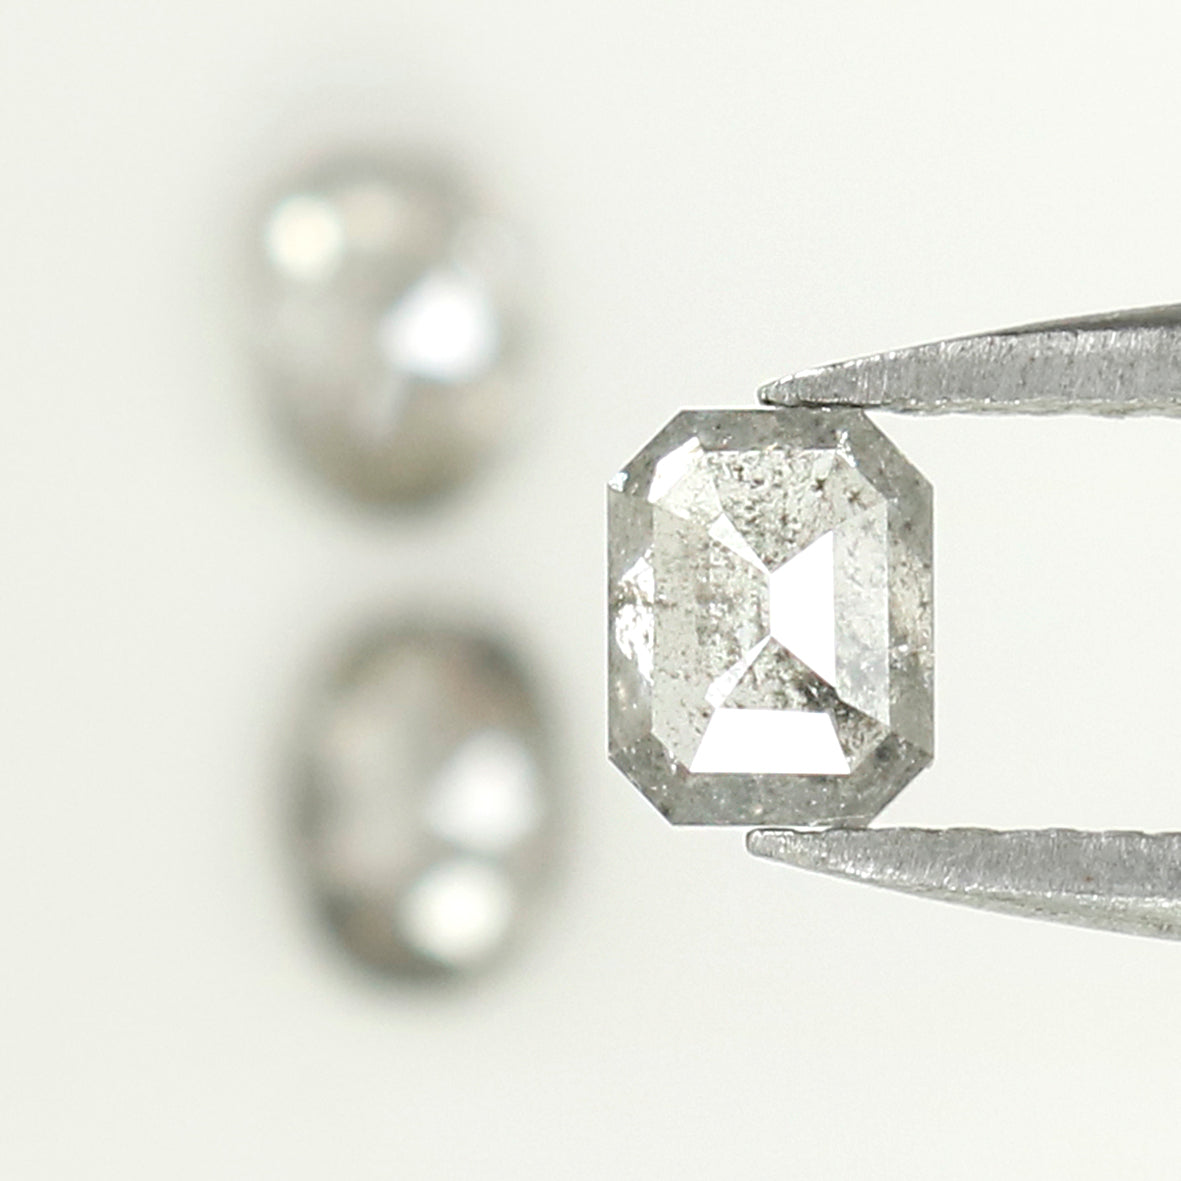 0.85 Ct Natural Loose Diamond, Mix Diamond, Salt And Pepper Diamond, Black Diamond, Grey Diamond, Minimal Diamond, Geometric Diamond, KDL636